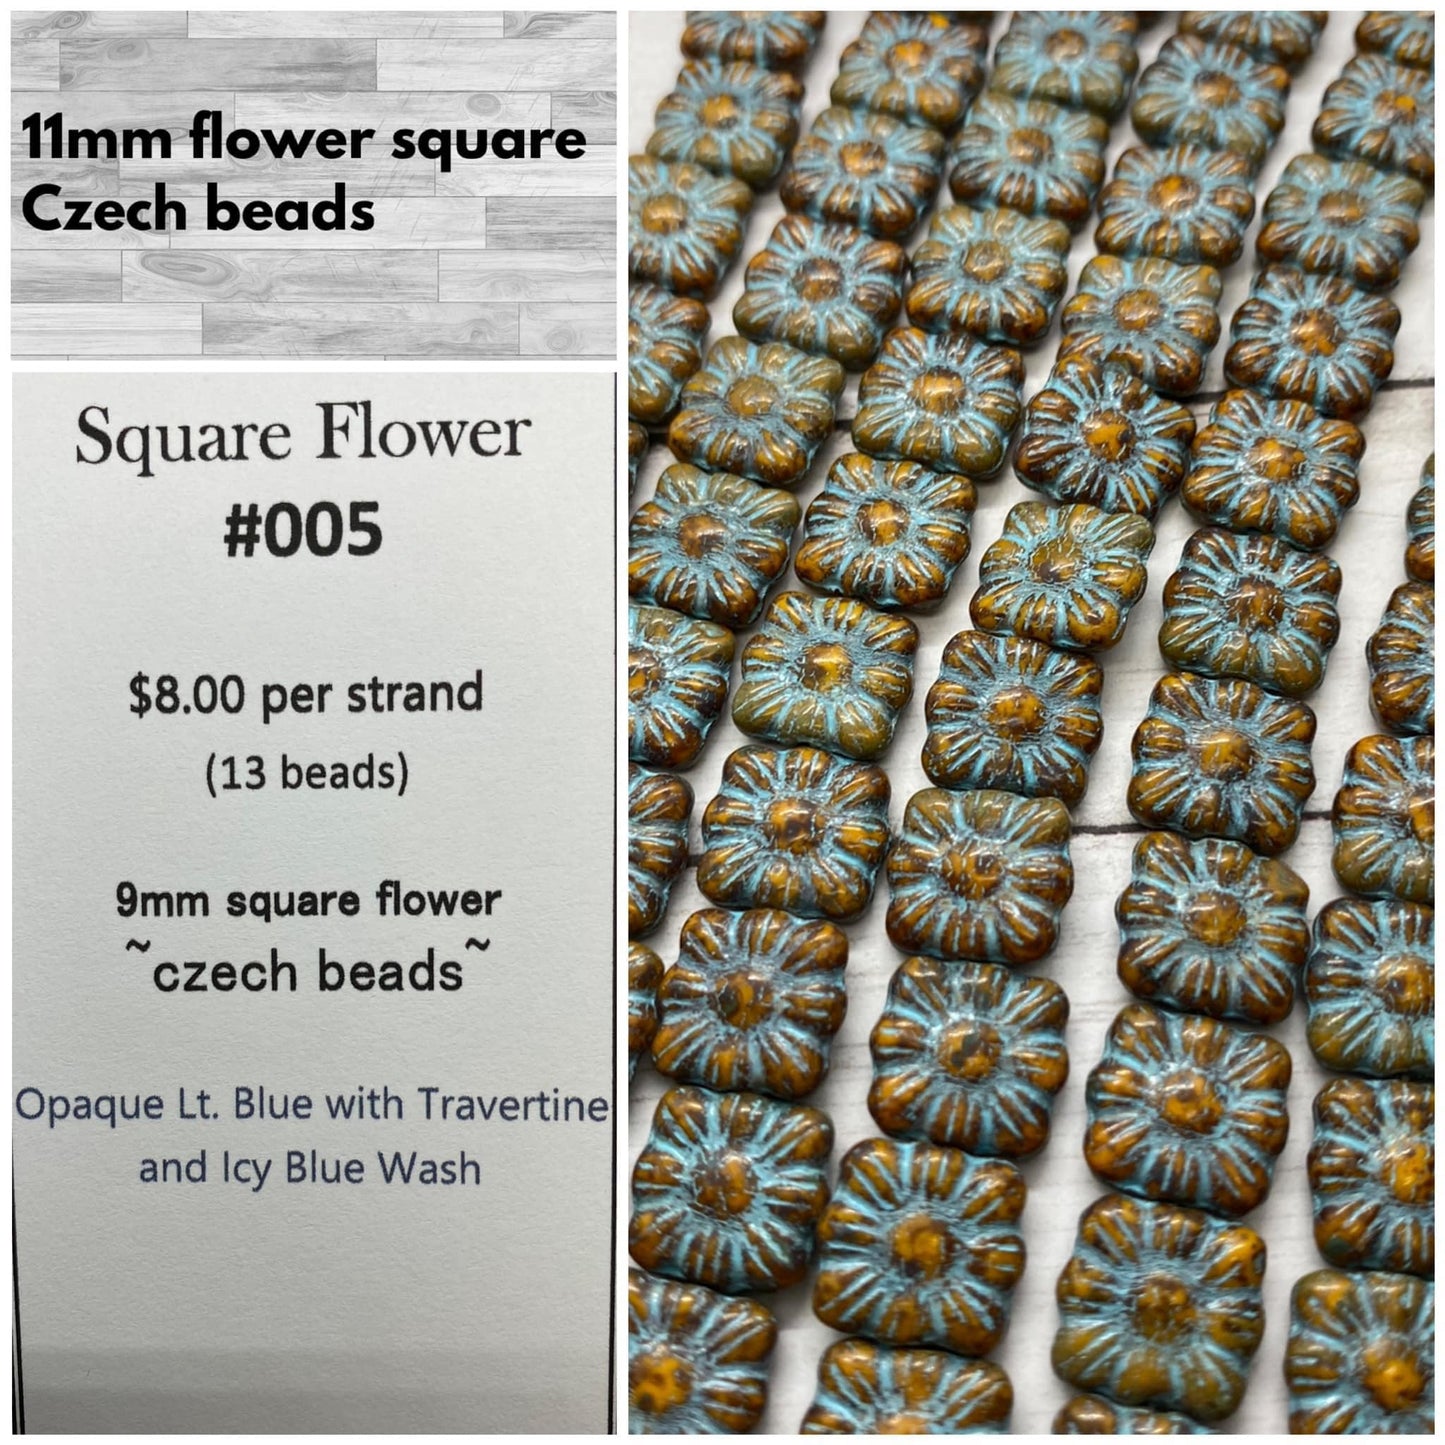 Flower Square #005